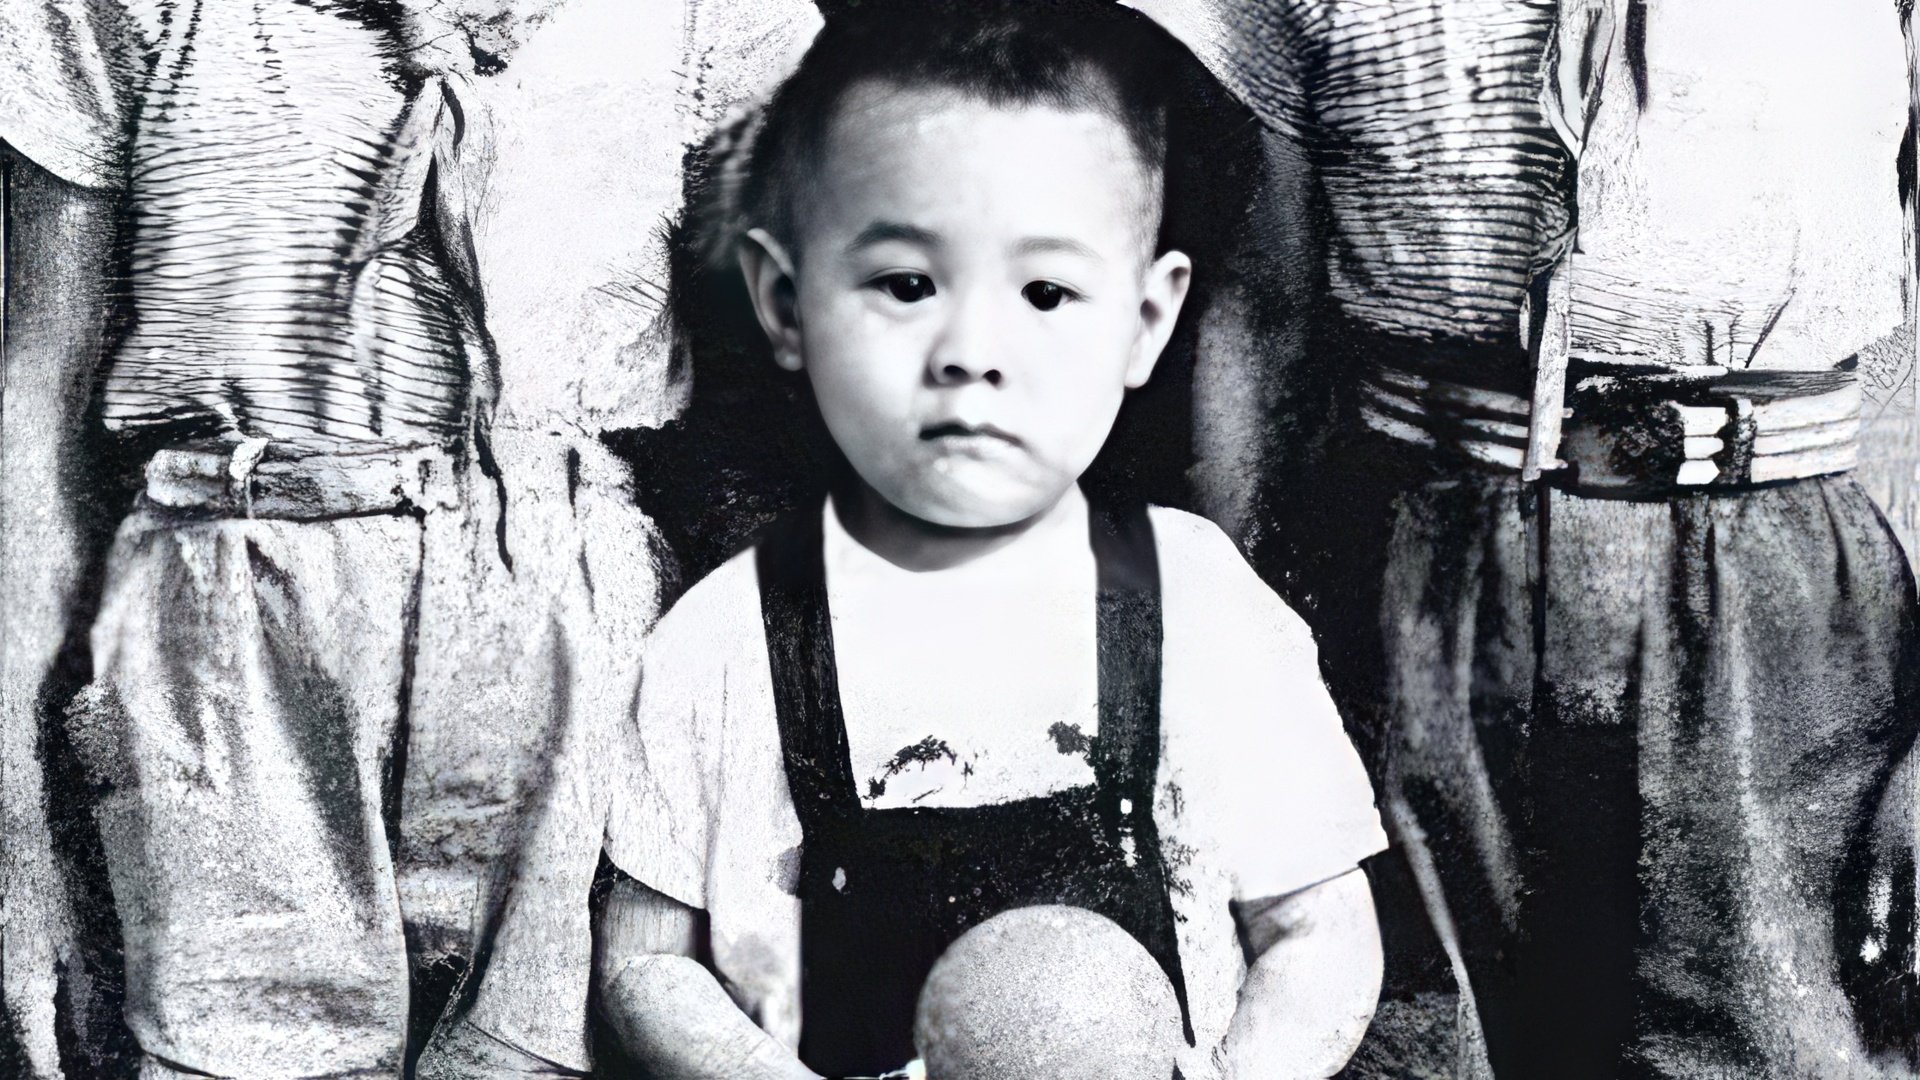 Jet Li in childhood